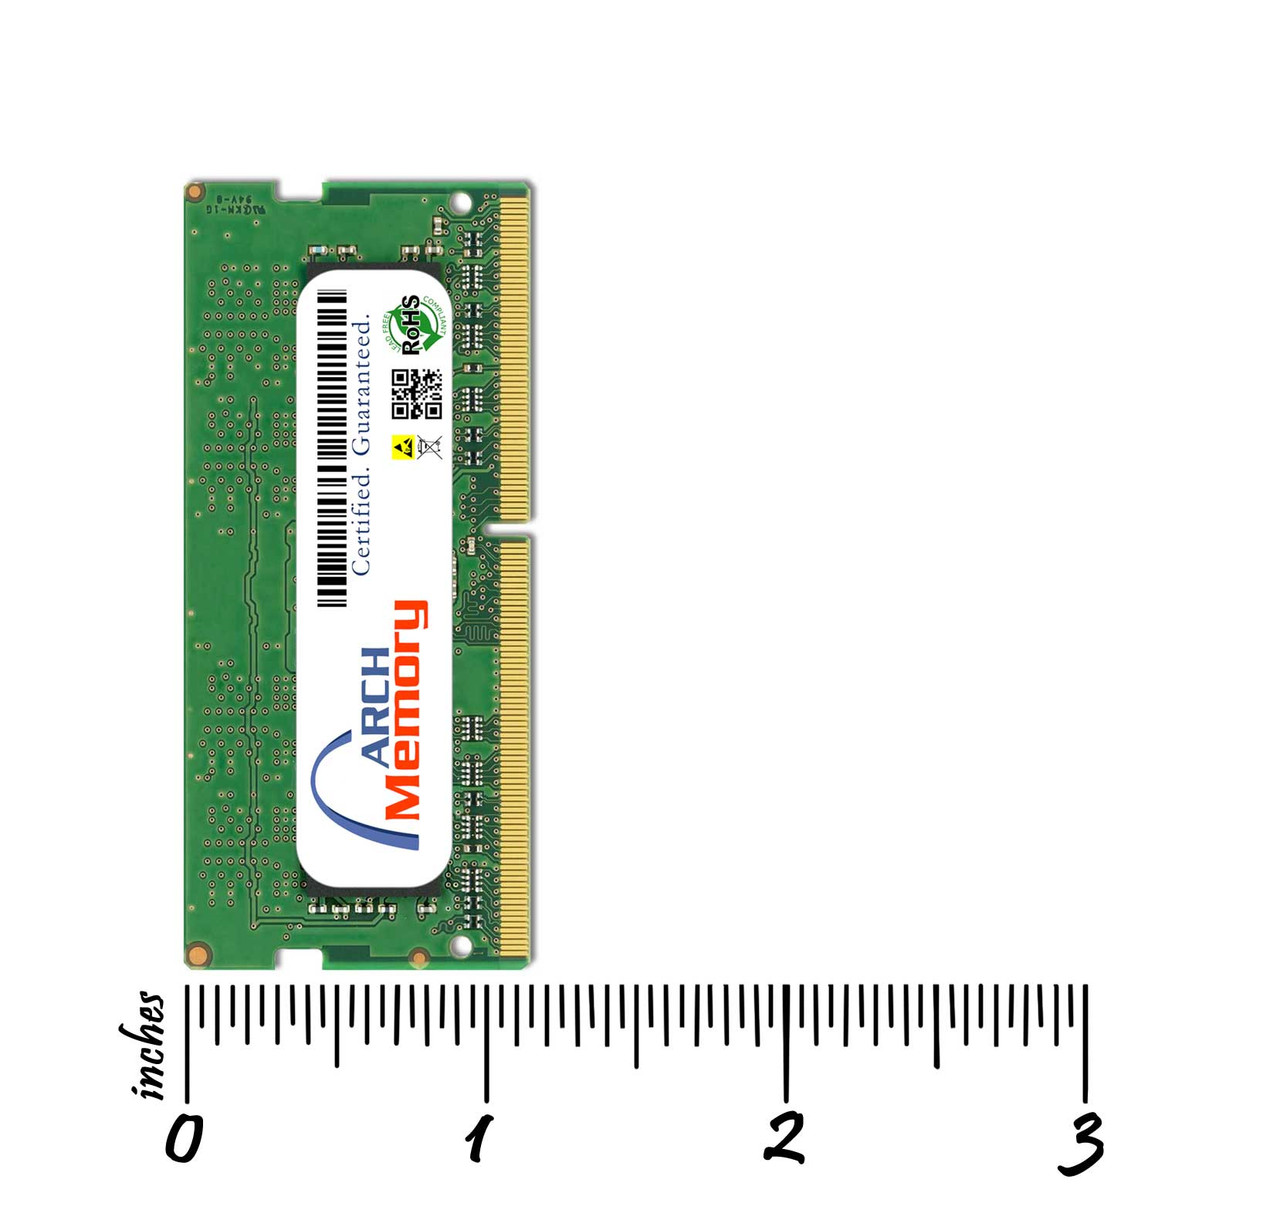 4GB 4X70M60573 260-Pin DDR4-2400 PC4-19200 So-dimm RAM Memory for Lenovo